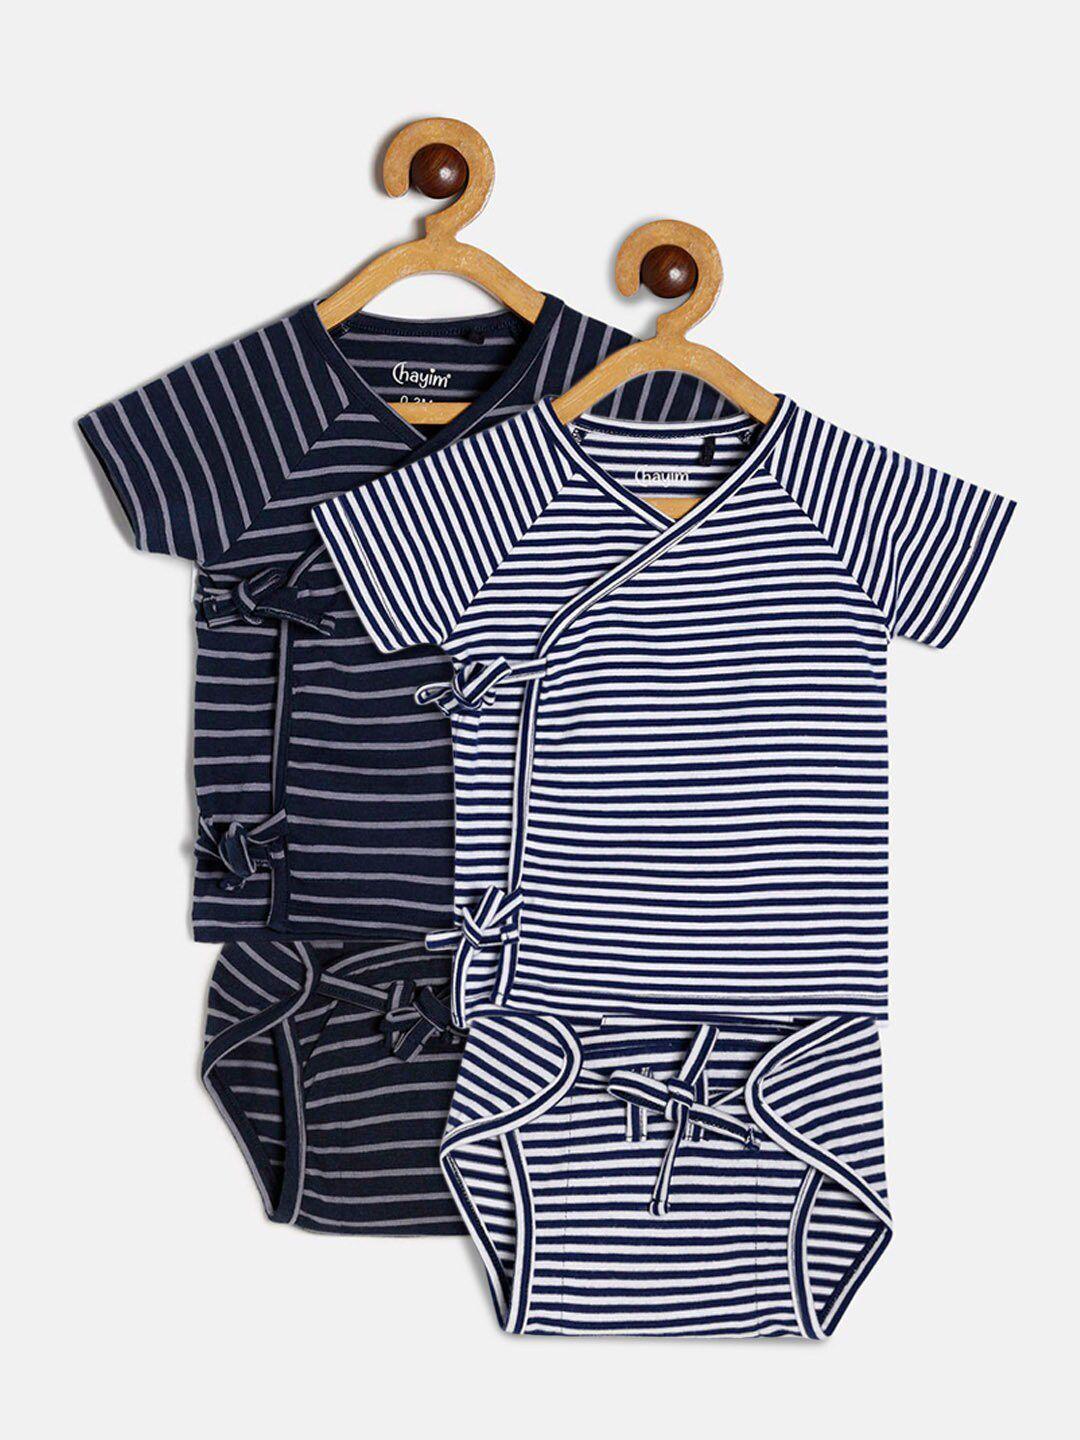 chayim unisex kids navy blue & white striped top